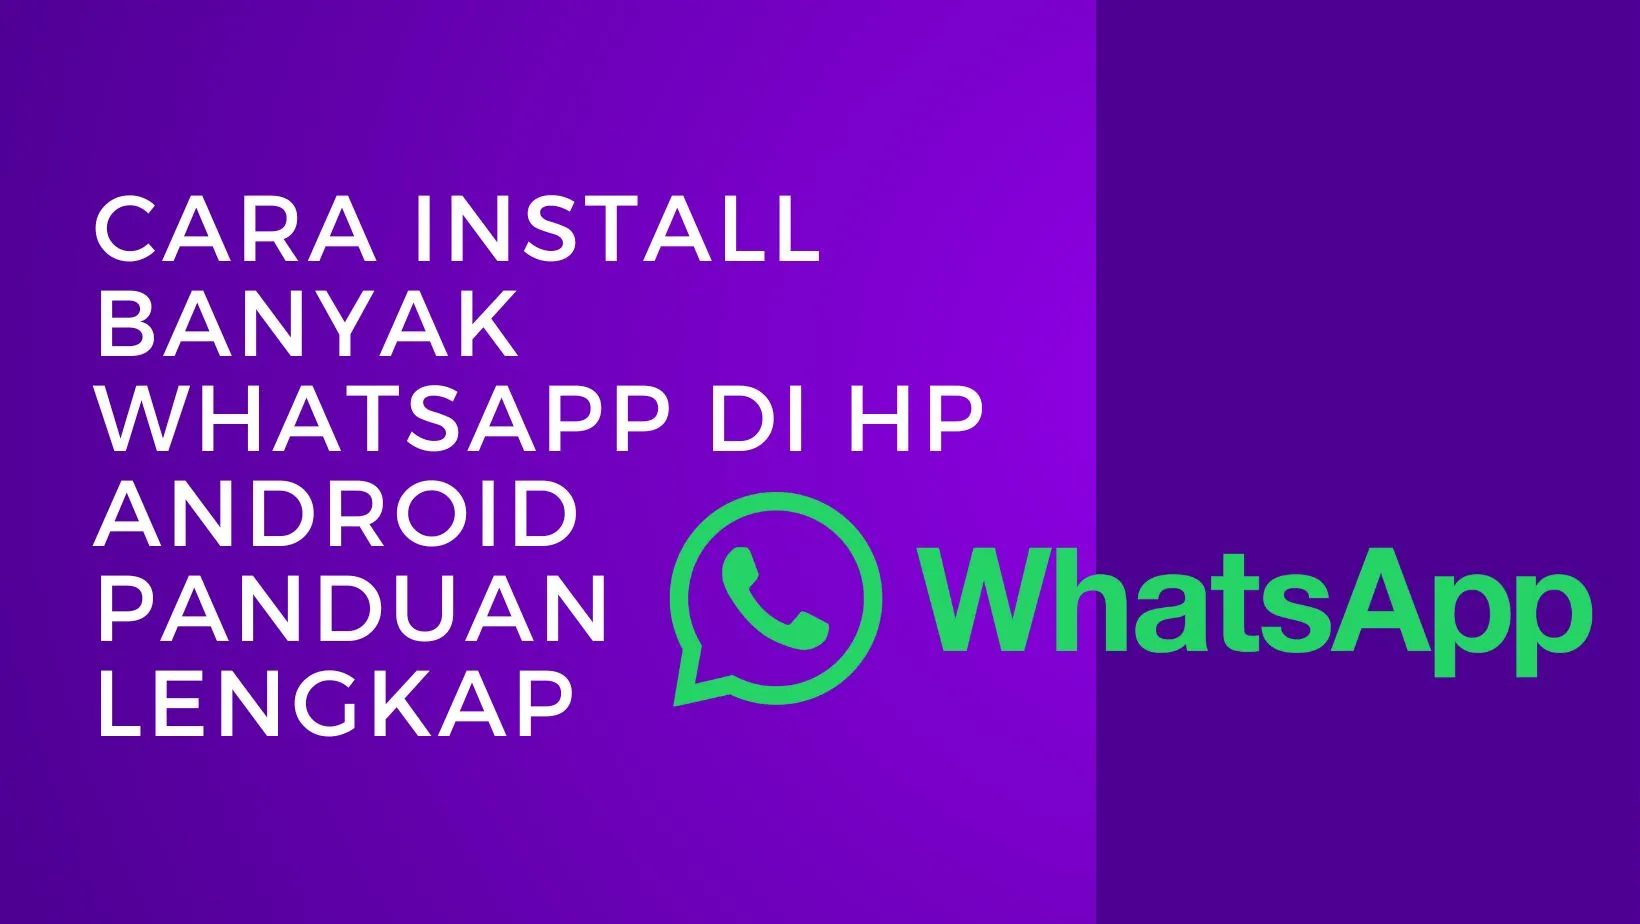 Cara Install Banyak WhatsApp di HP Android: Panduan Lengkap